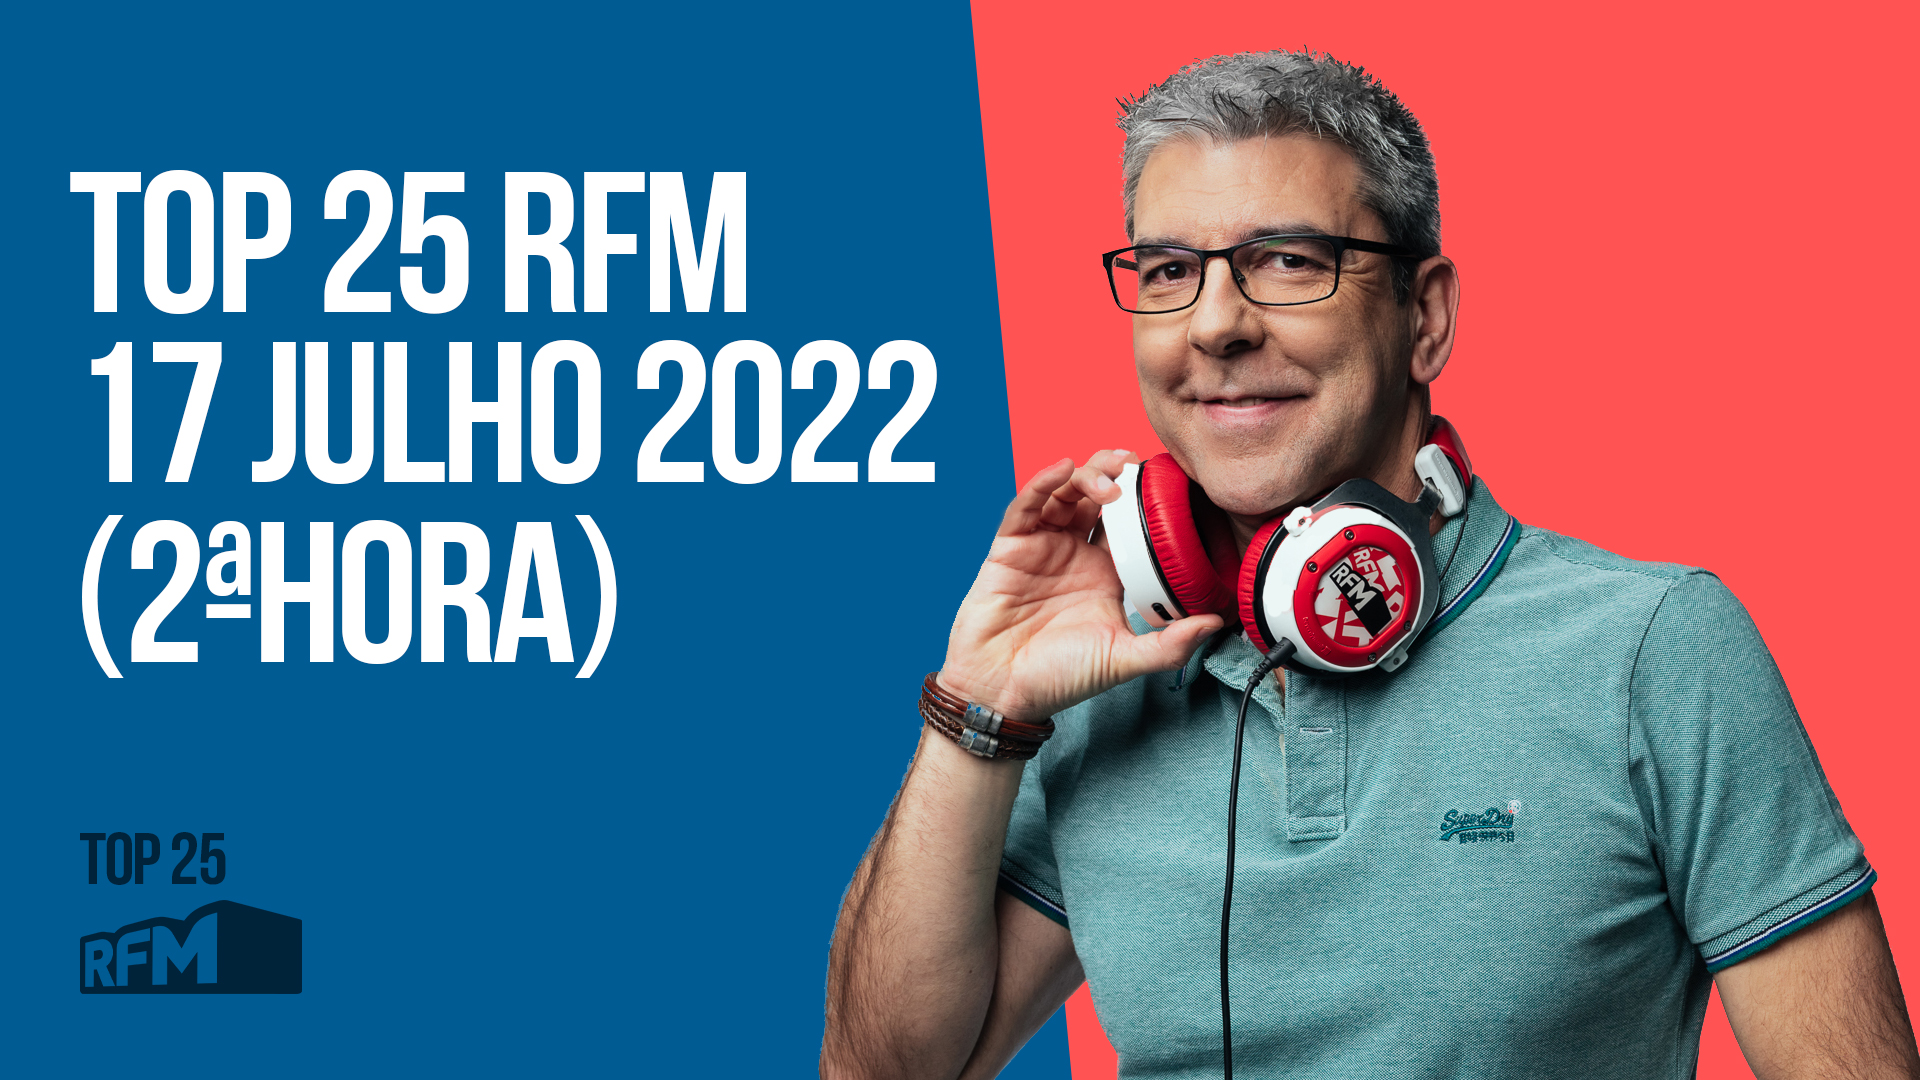 TOP 25 RFM 17 JULHO DE 2022 - 2ª HORA